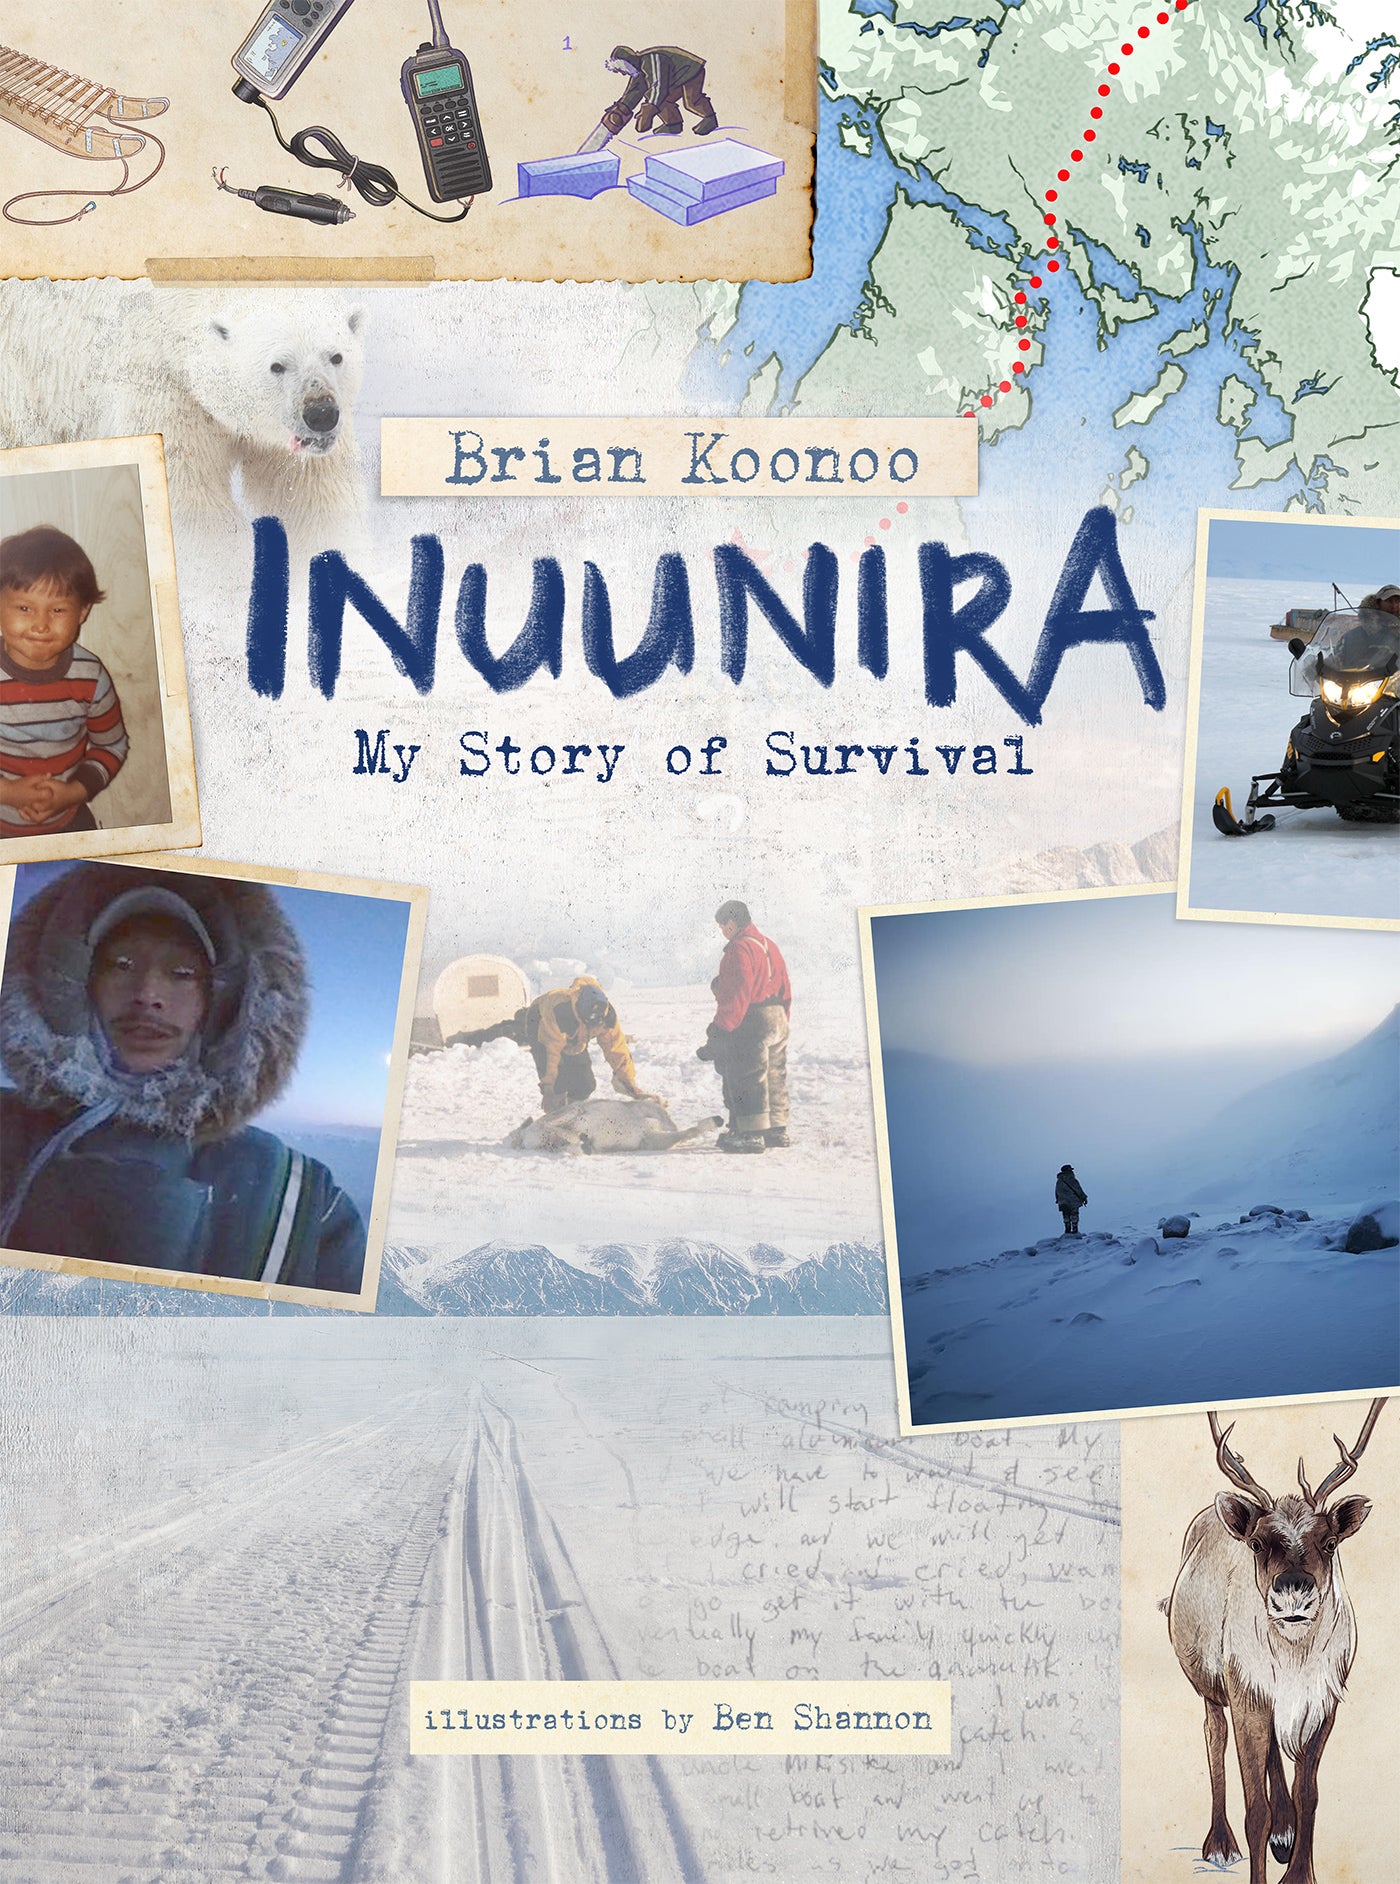 Inuunira: My Story of Survival